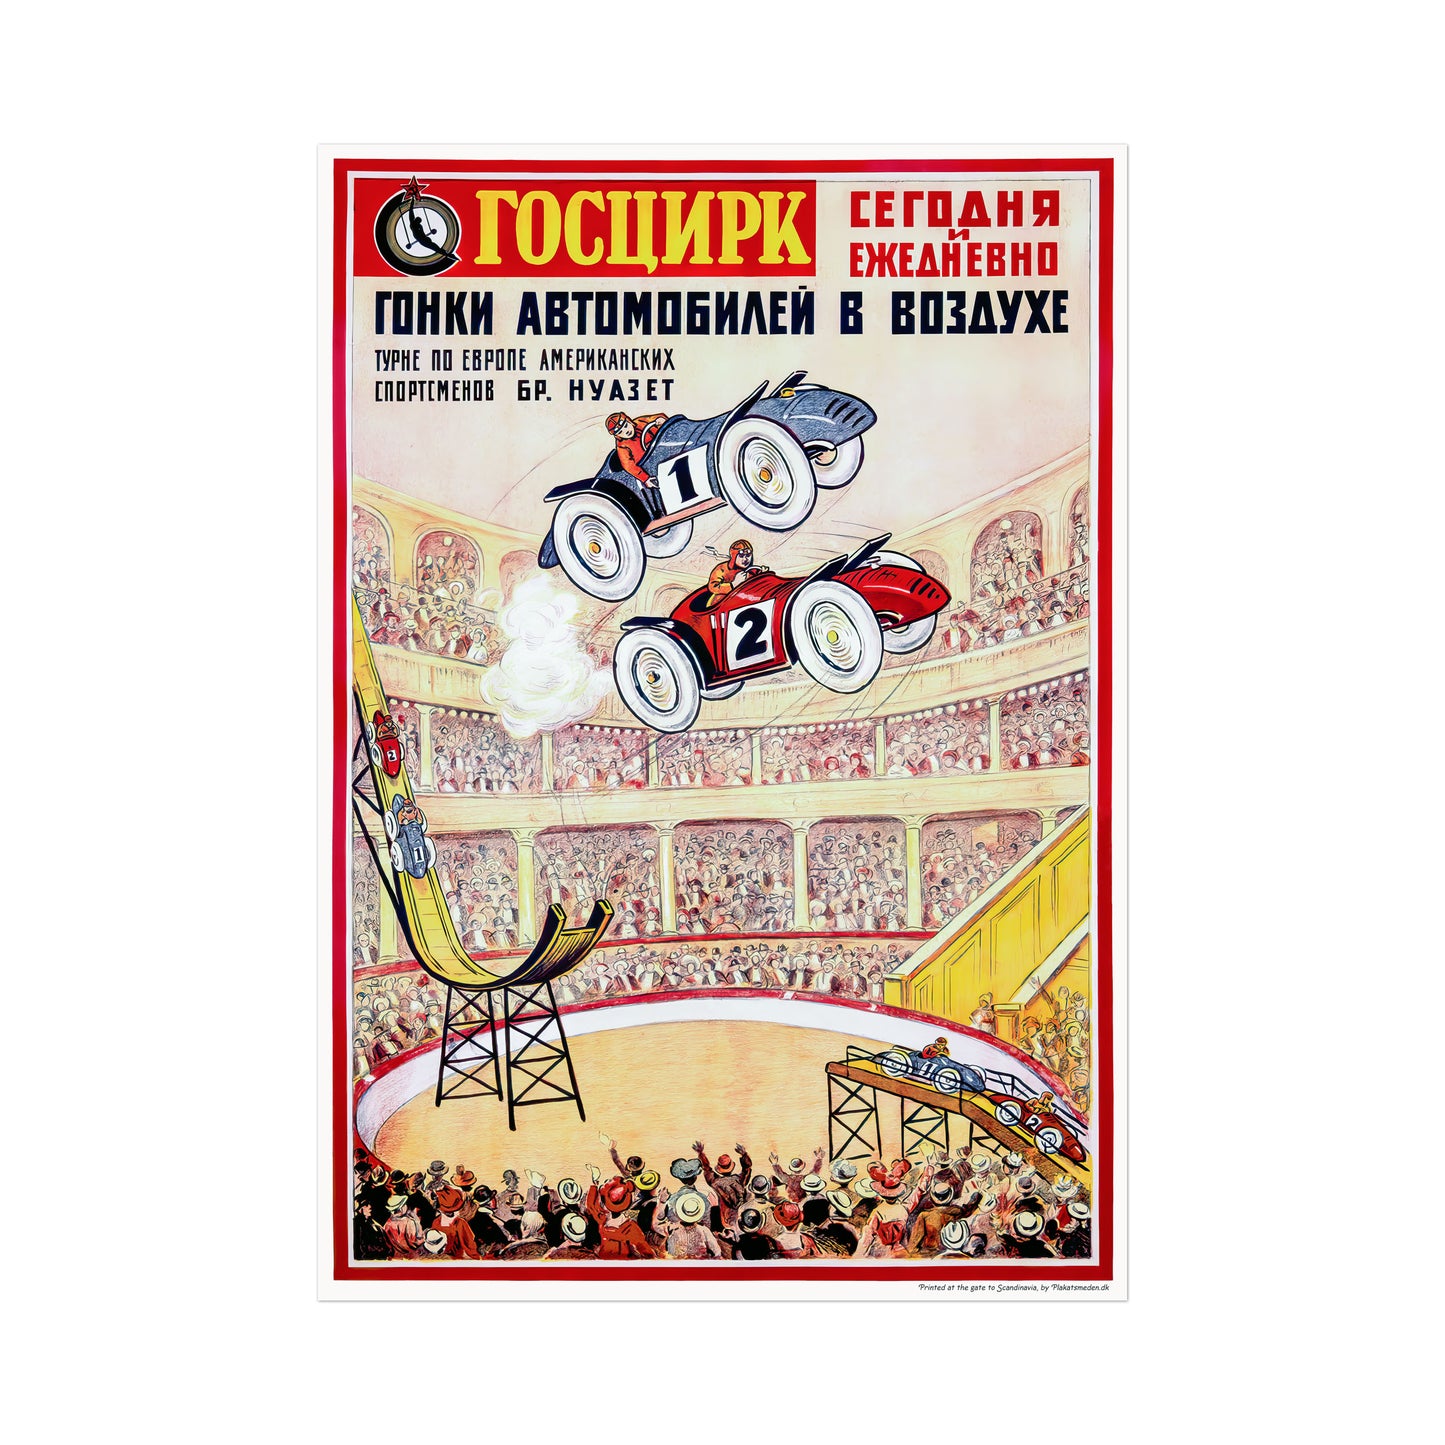 Car racing in the air - Russian circus poster